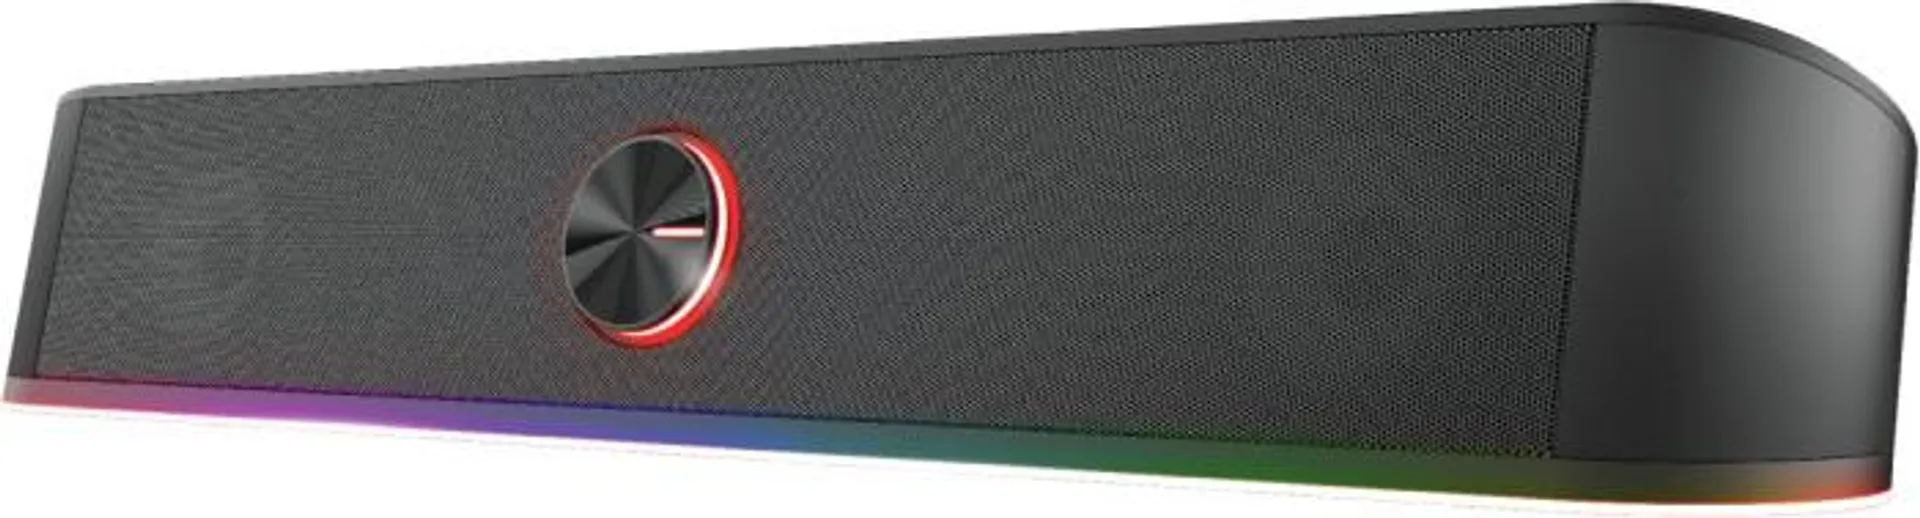 Trust GXT 619 THORNE RGB Illuminated Soundbar